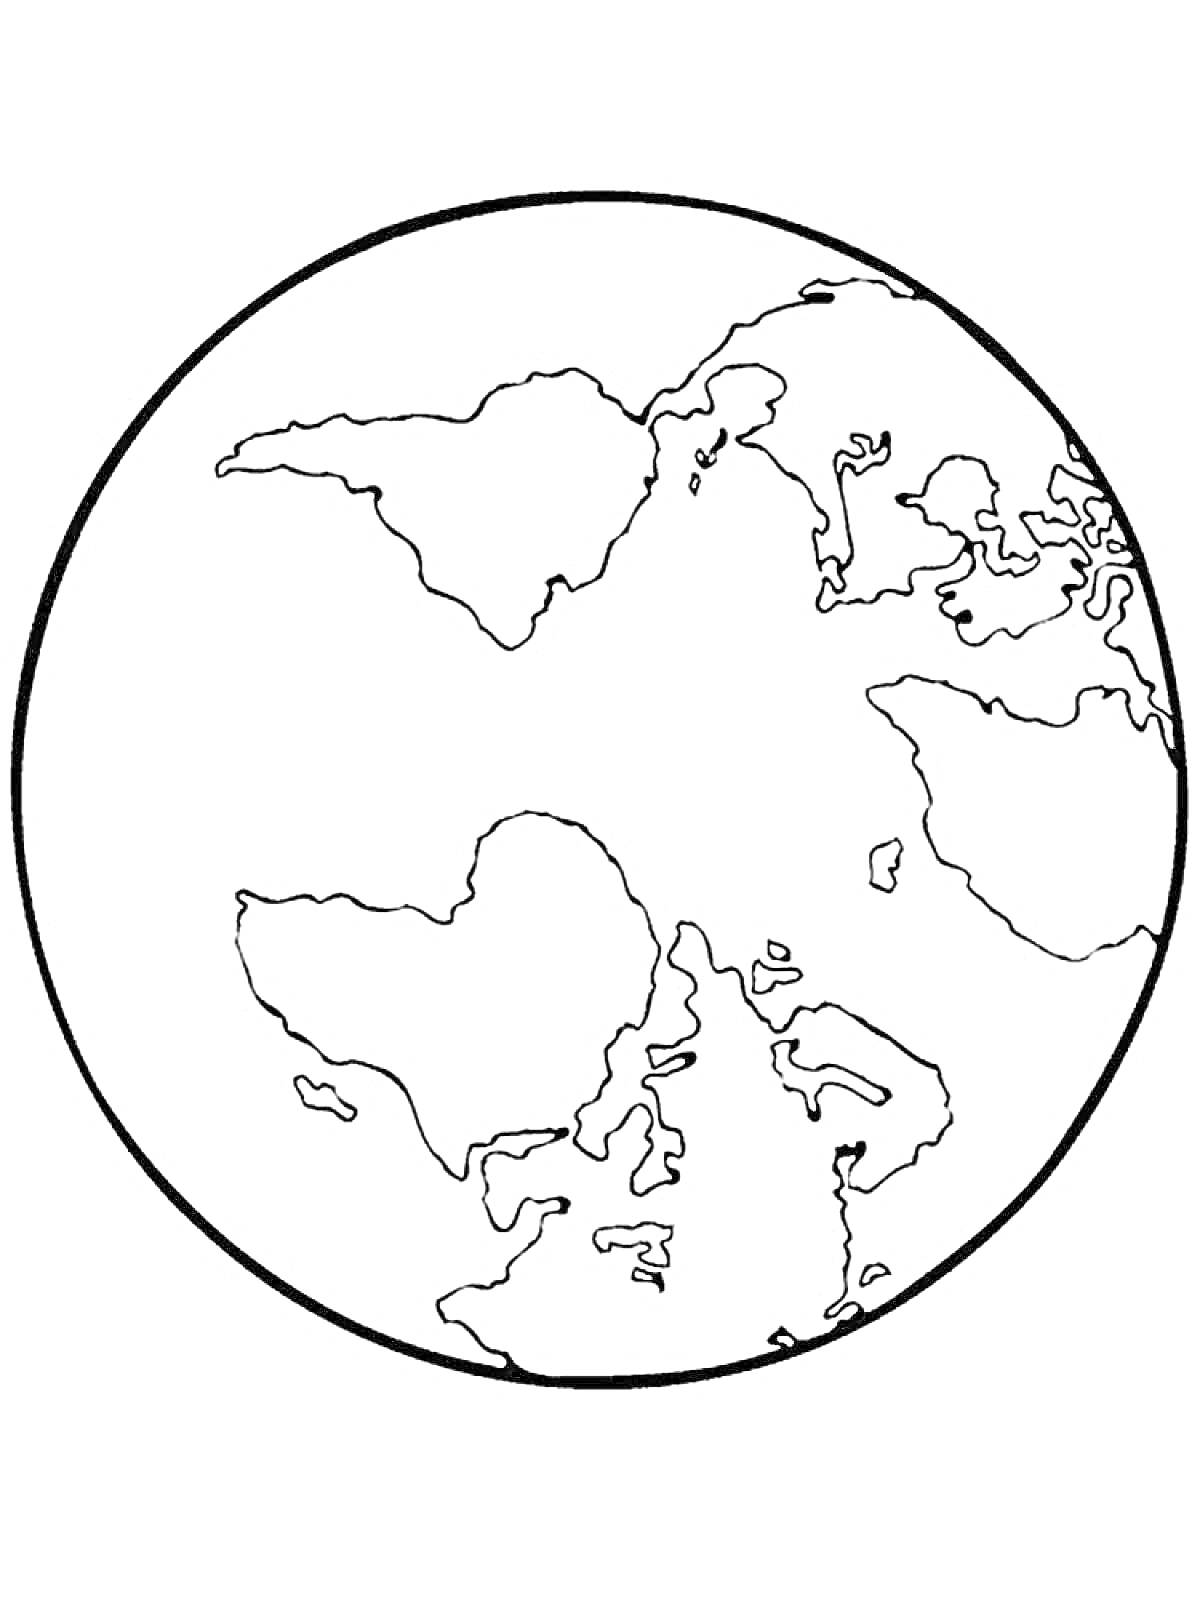 Раскраска Изображение планеты Земля с континентами Северная Америка, Южная Америка, Африка, Европа и Азия